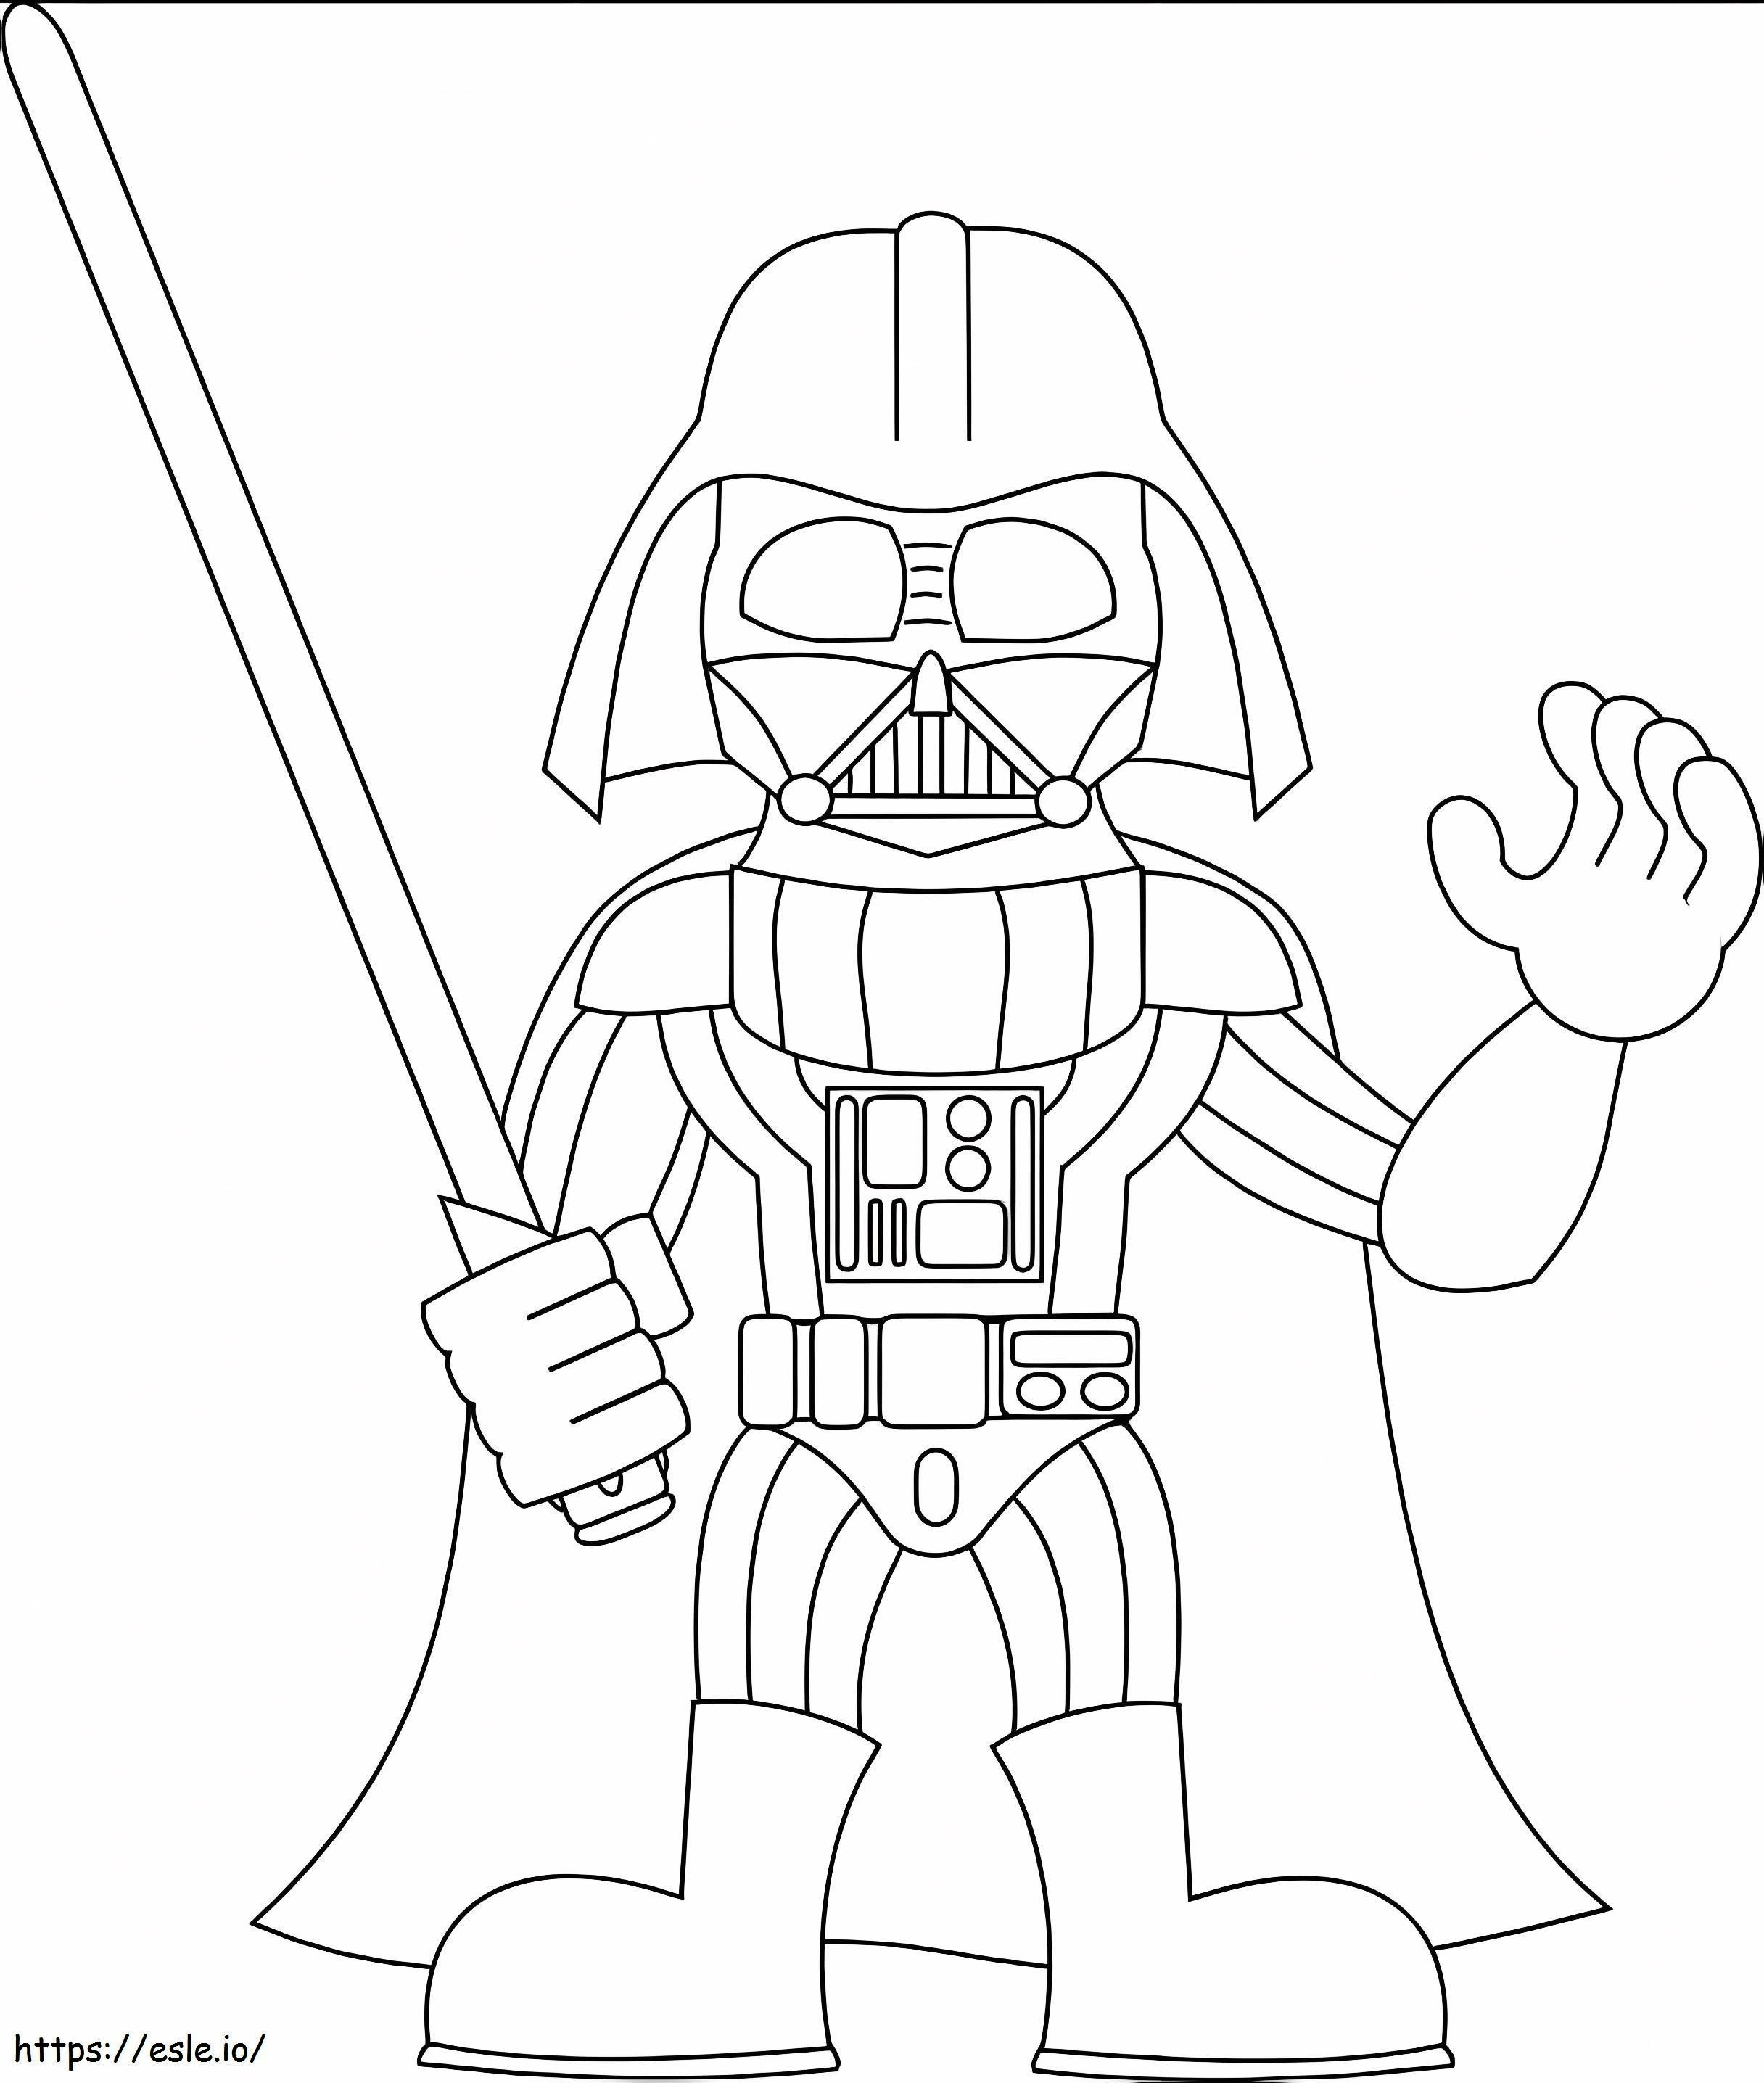 Darth Vader 4 coloring page